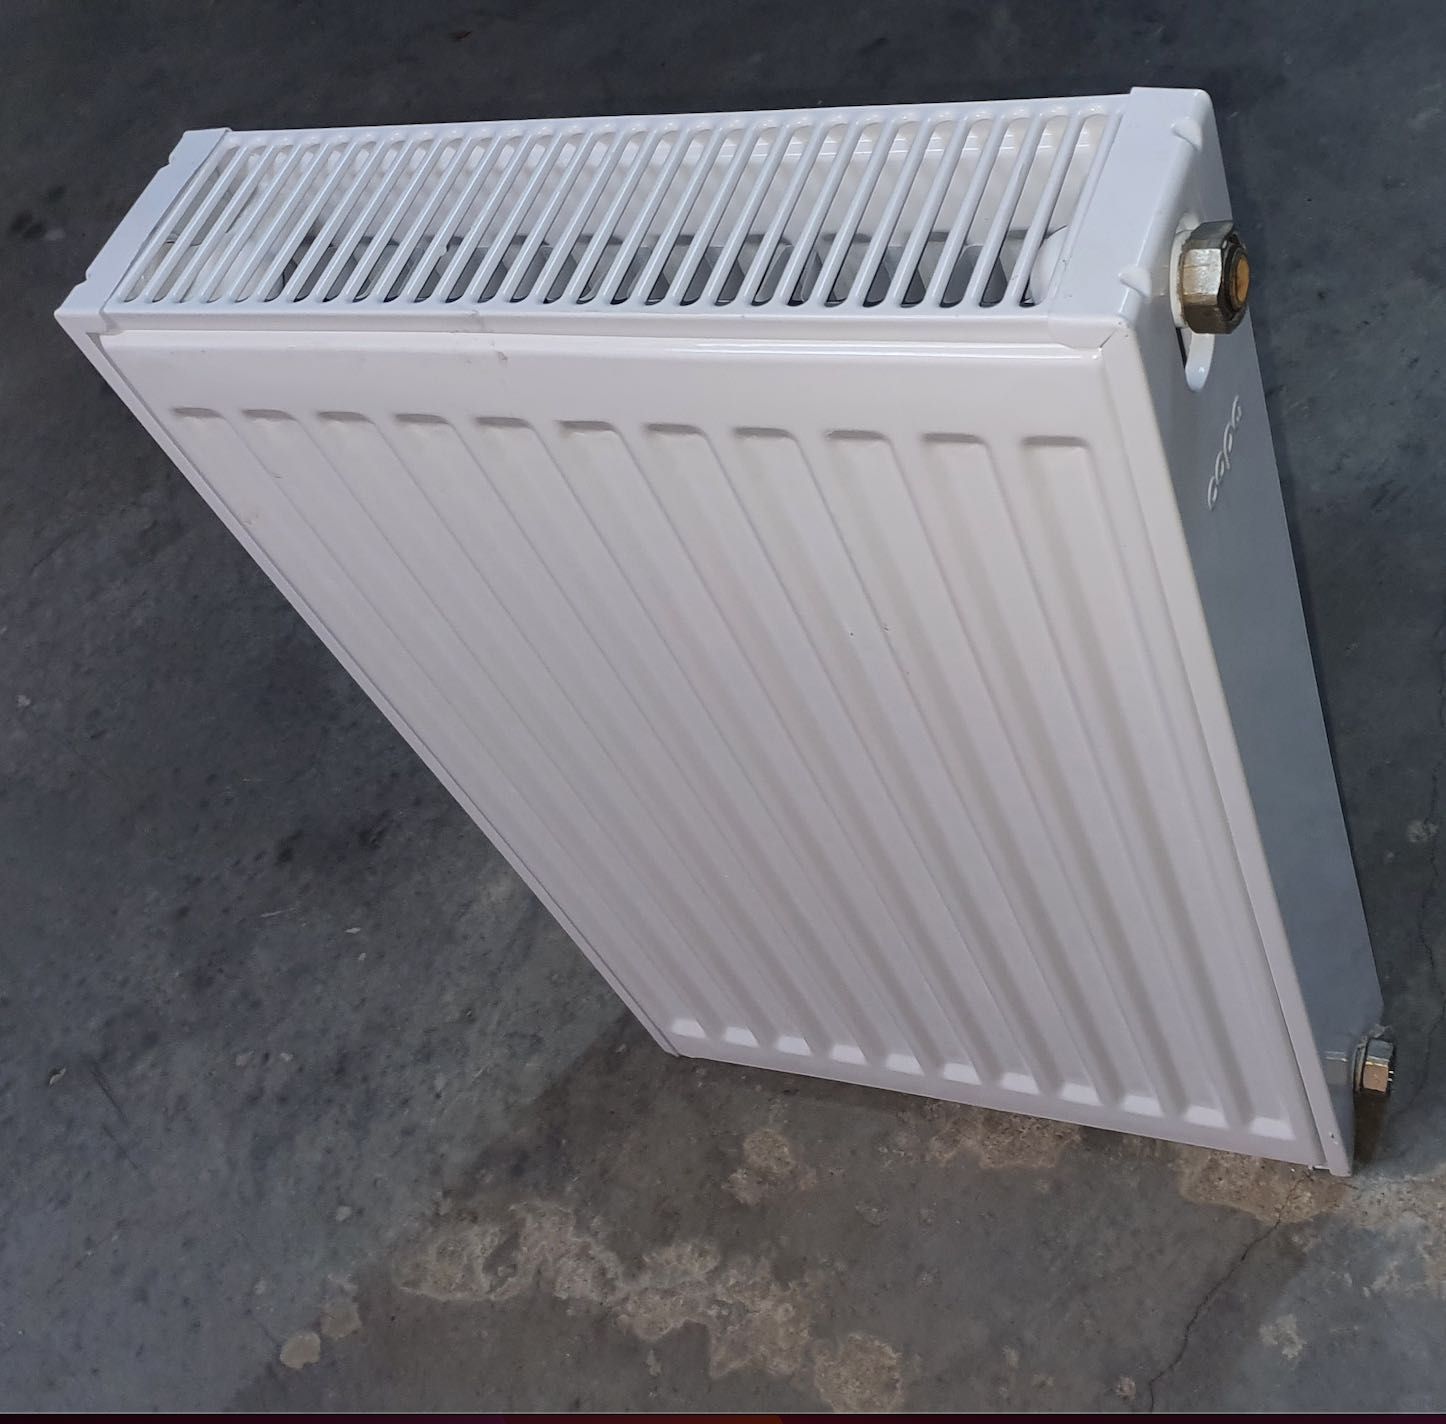 Calorifer / radiator Copa KONWEKS 600/400 mm (Hxl)